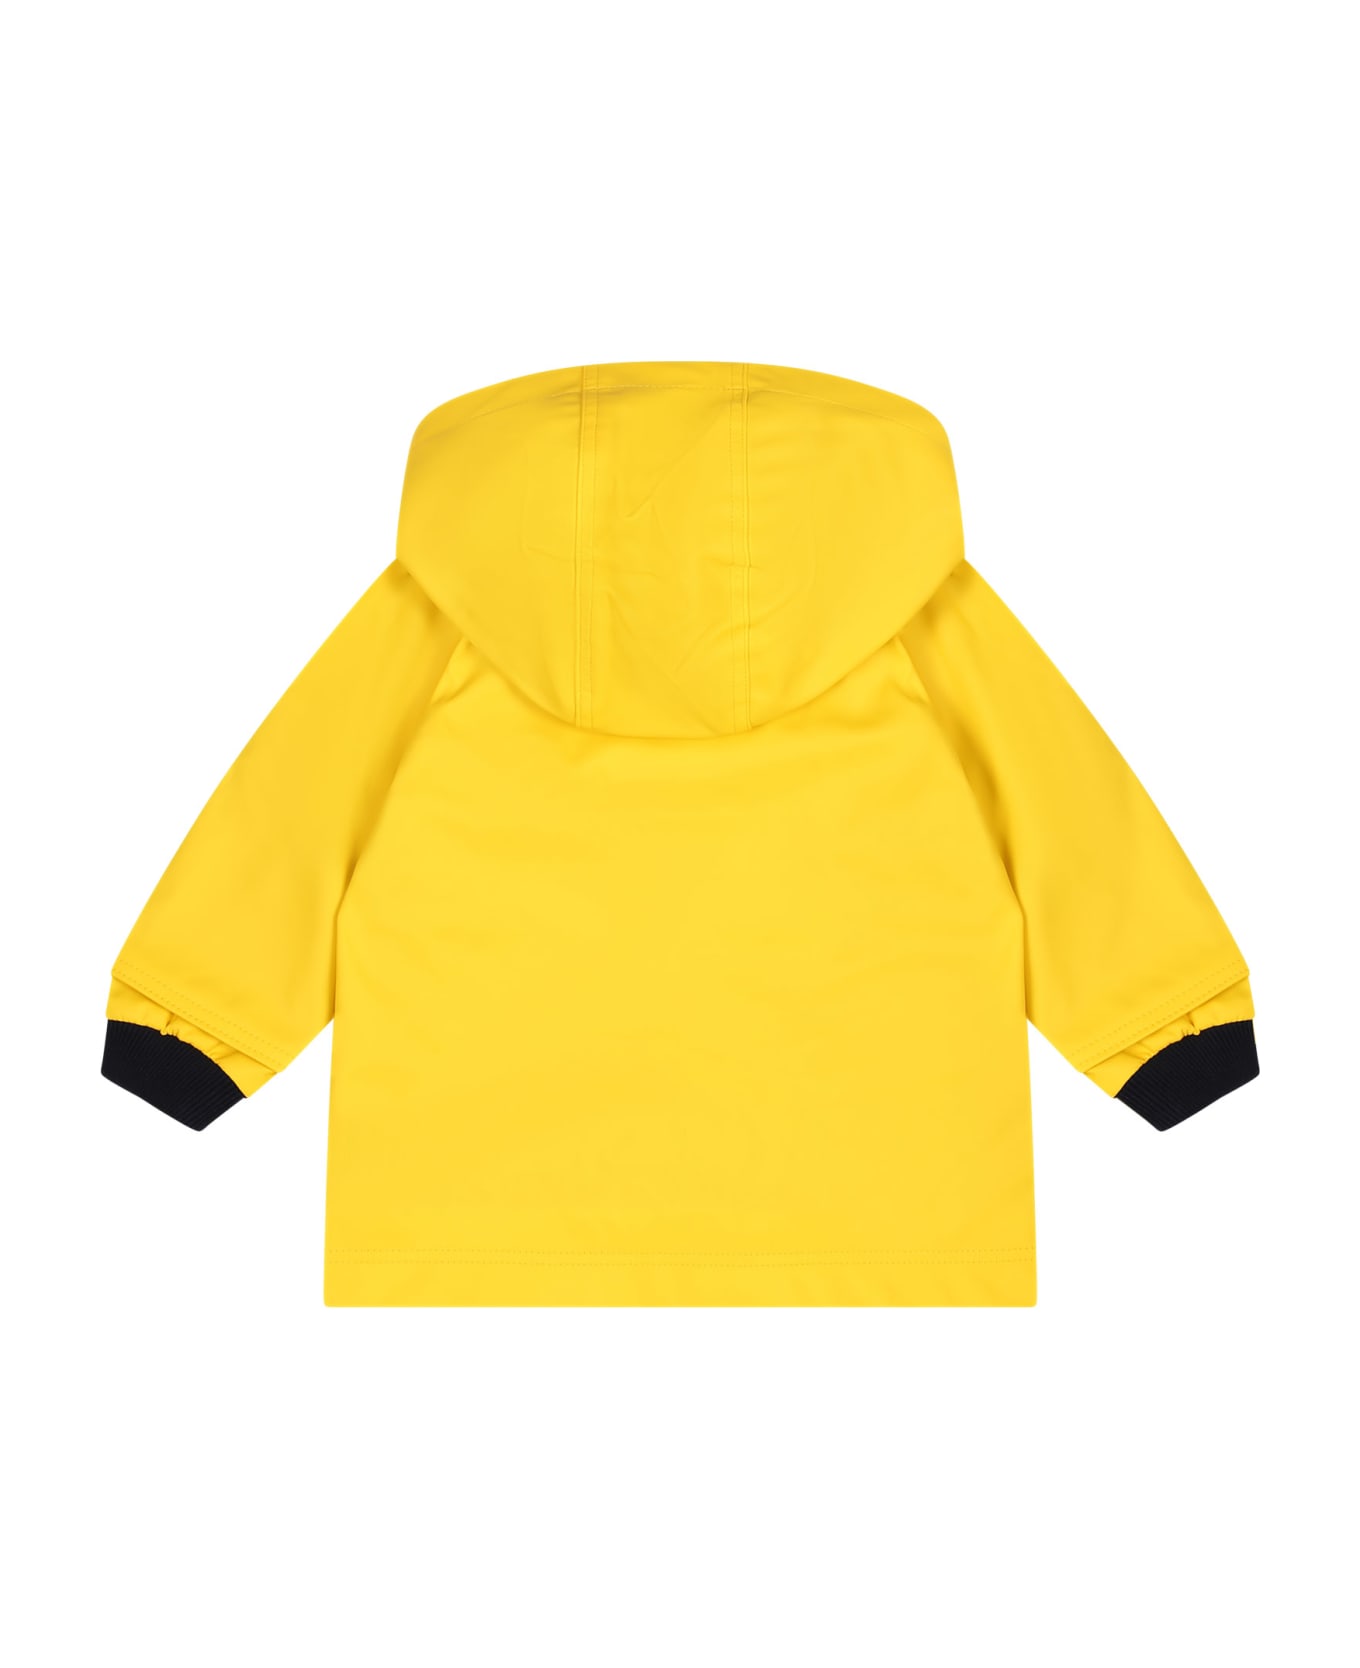 Petit Bateau Yellow Raincoat For Baby Boy - Yellow